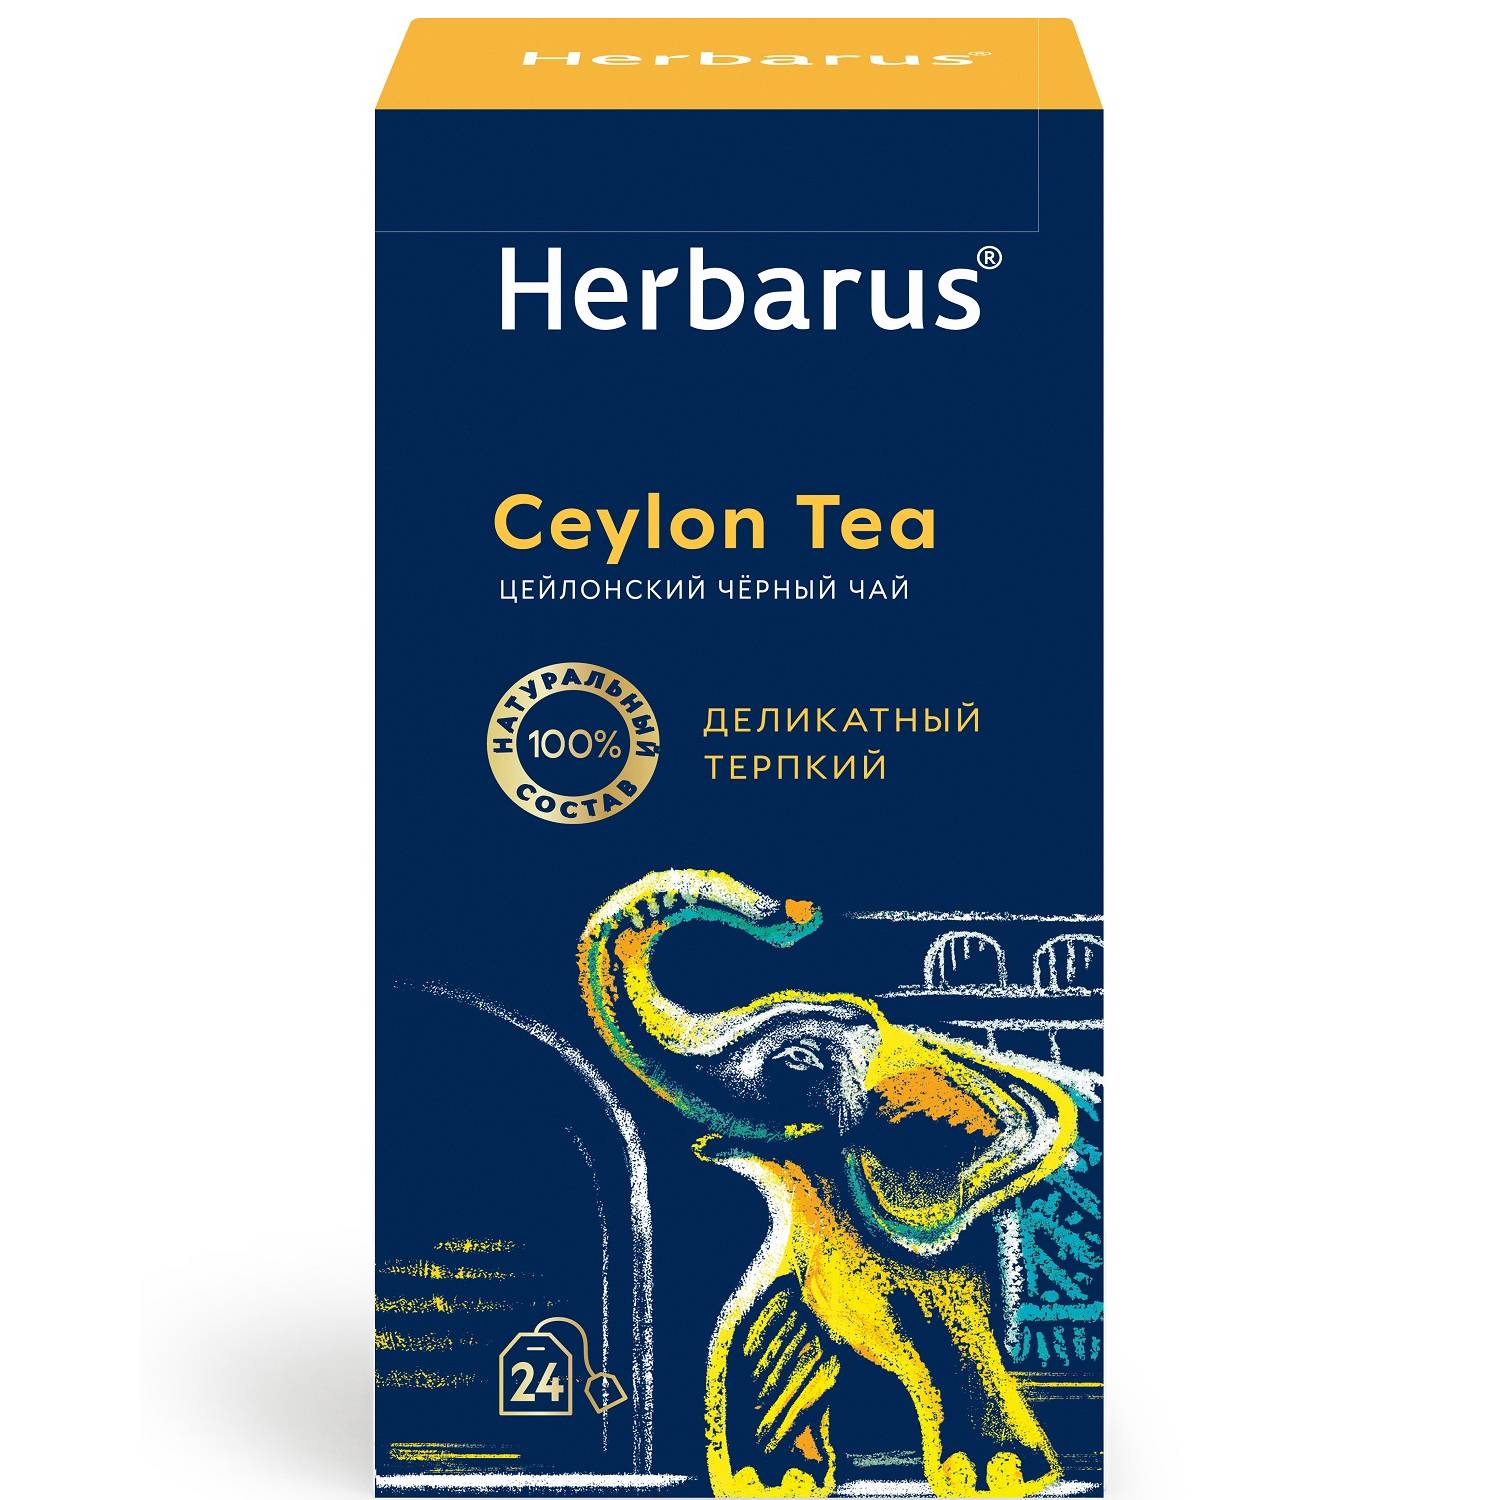 Herbarus Цейлонский черный чай Ceylon Tea, 24 пакетика х 2 г (Herbarus, Классический чай) чай черный golden ceylon vintage black tea heladiv в фильтр пакетах 25 шт х 2 г